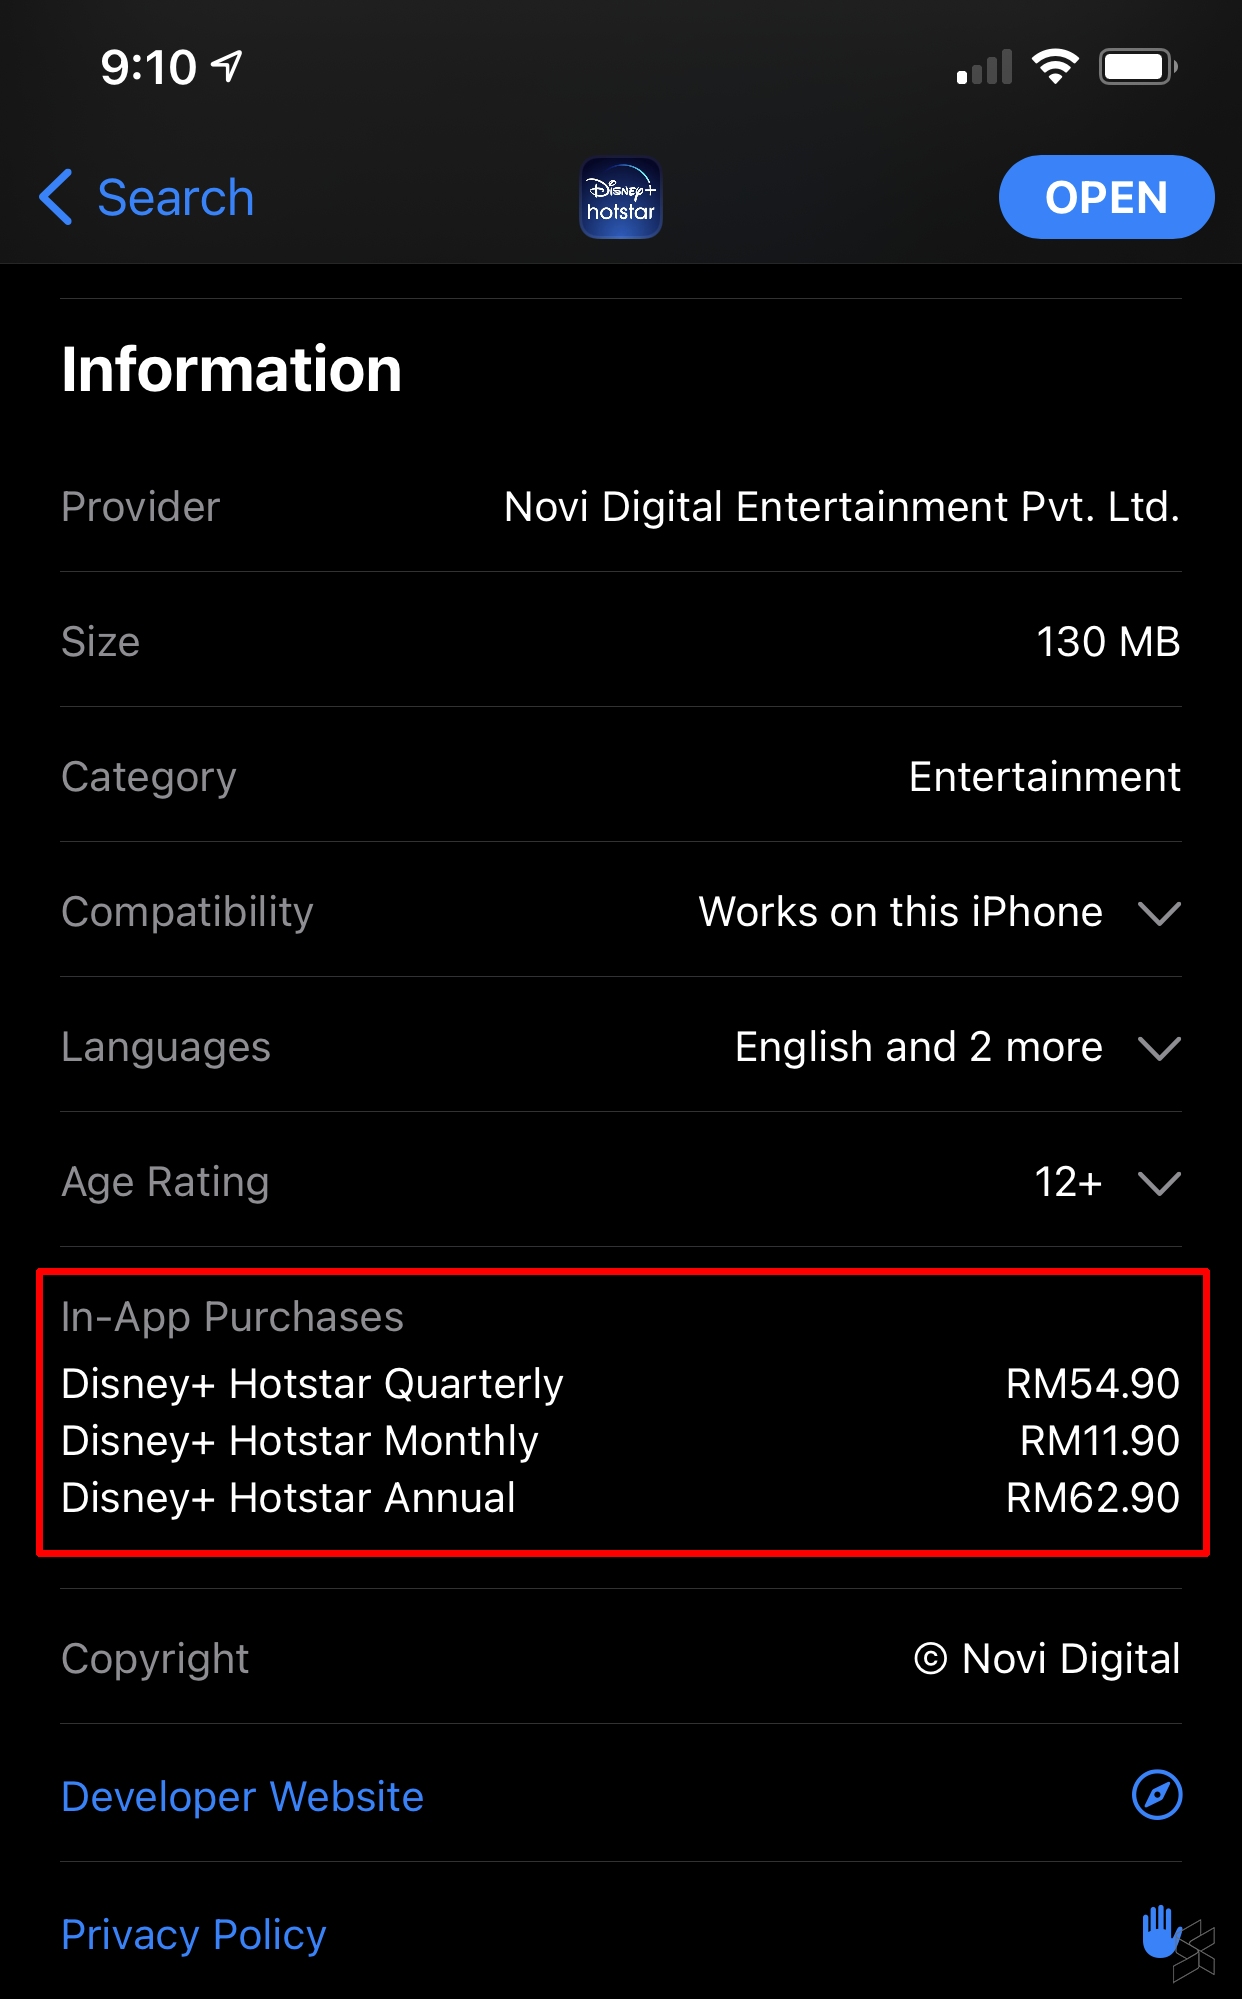 Malaysia hotstar Comparison: Disney+